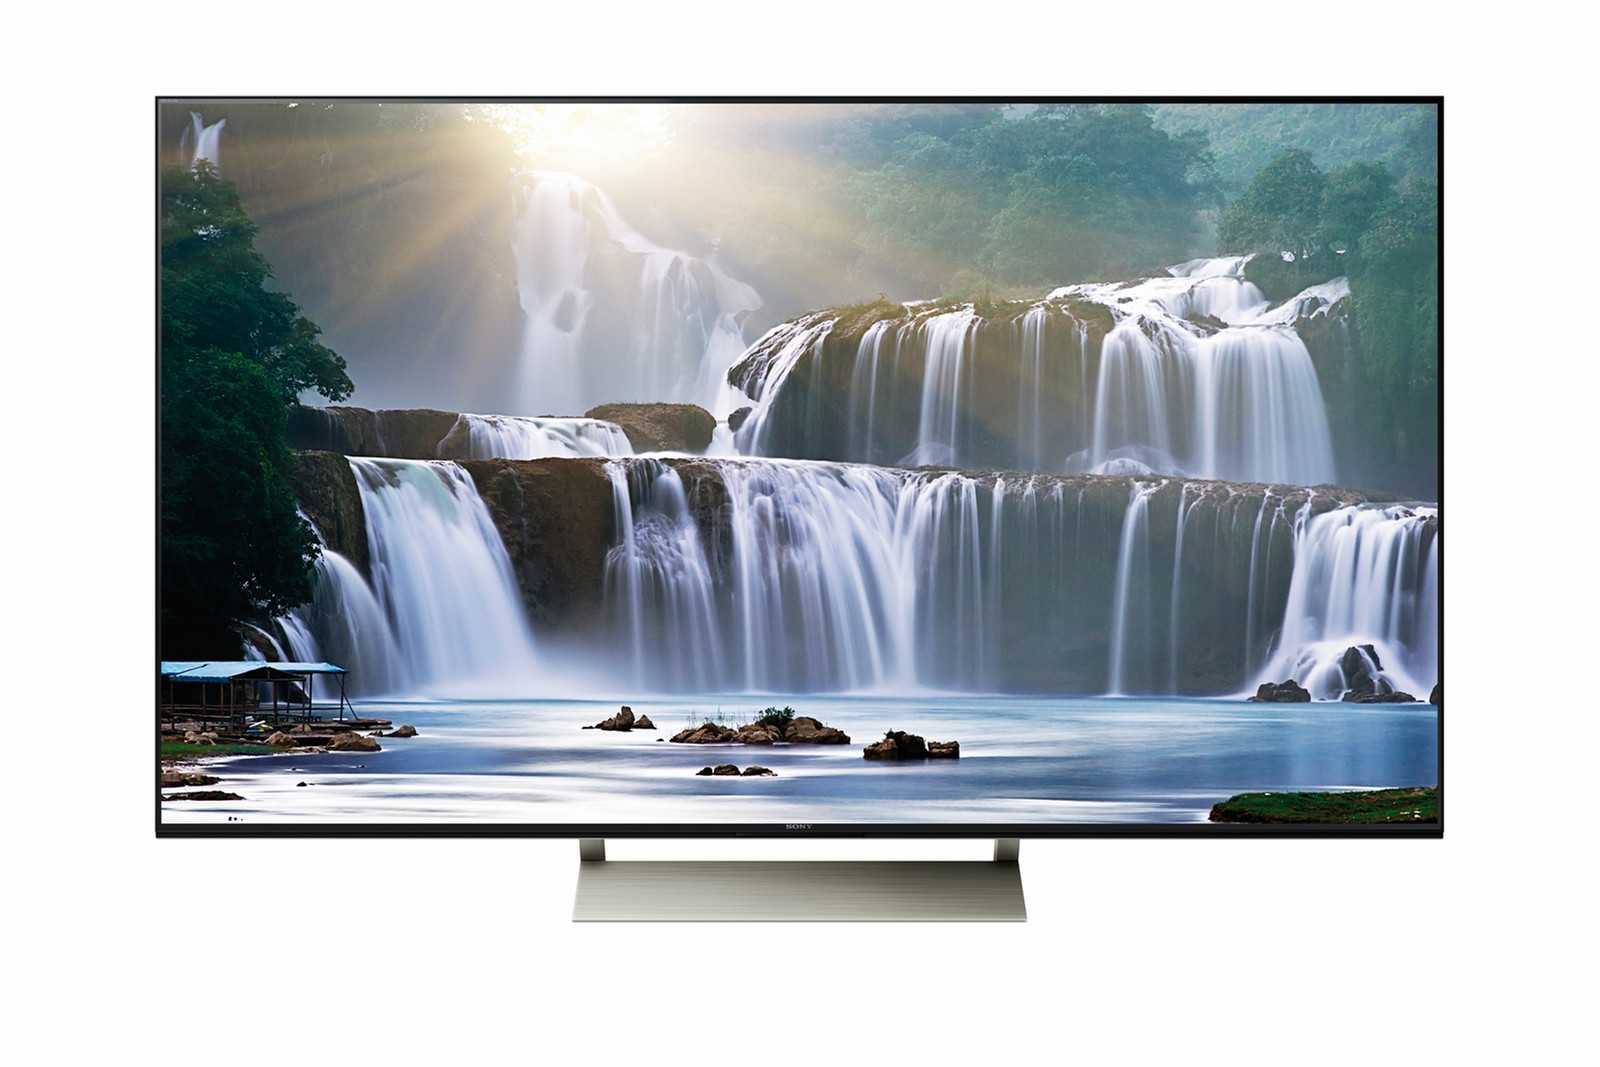 Sony kd-75xe9405 - купить , скидки, цена, отзывы, обзор, характеристики - телевизоры